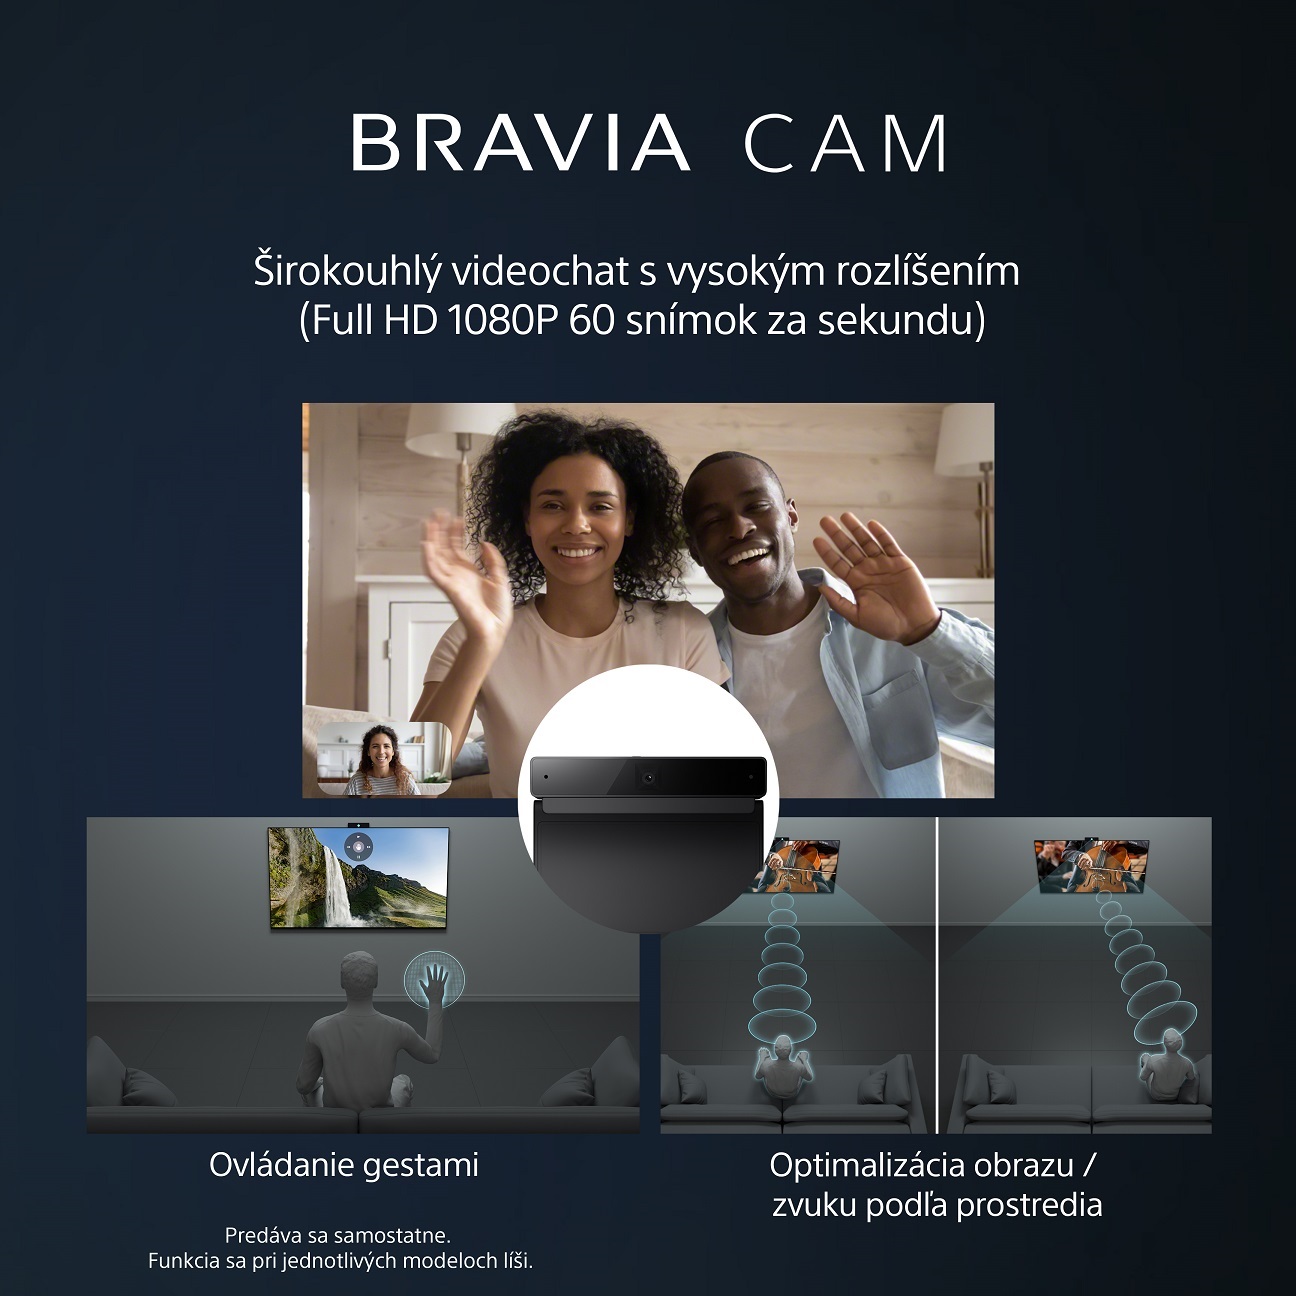 Smart LED televízor Sony Bravia XR-55X90L